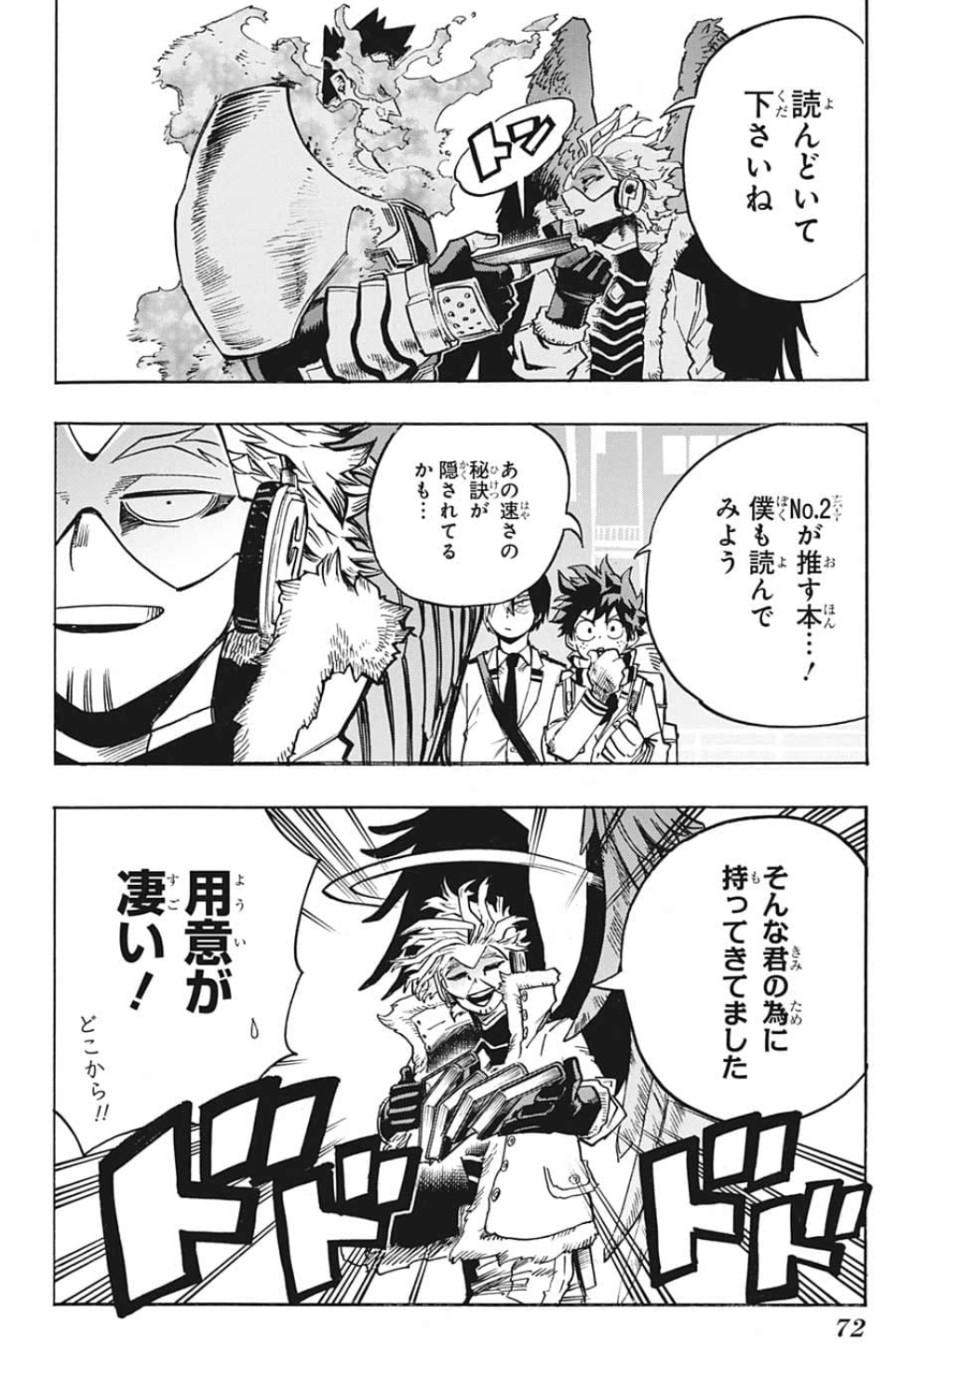 Boku no Hero Academia - Chapter 245 - Page 2